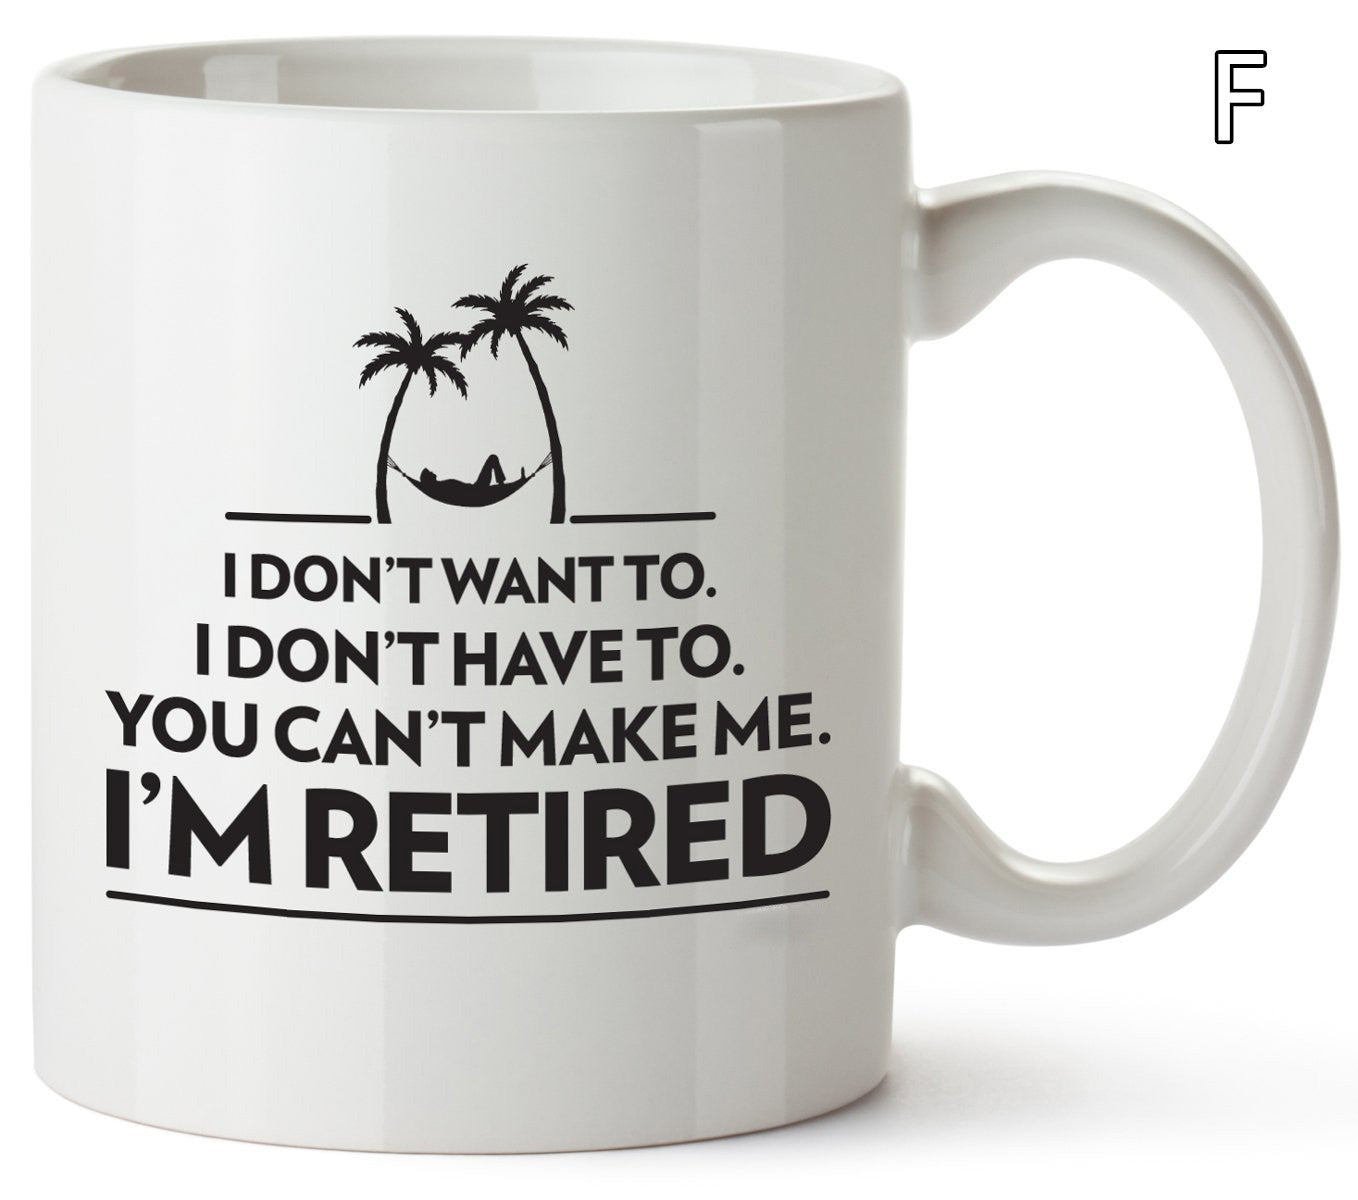 Retirement Schedule Cat Mug Retirement Ceramic Coffee Mark Water Cup